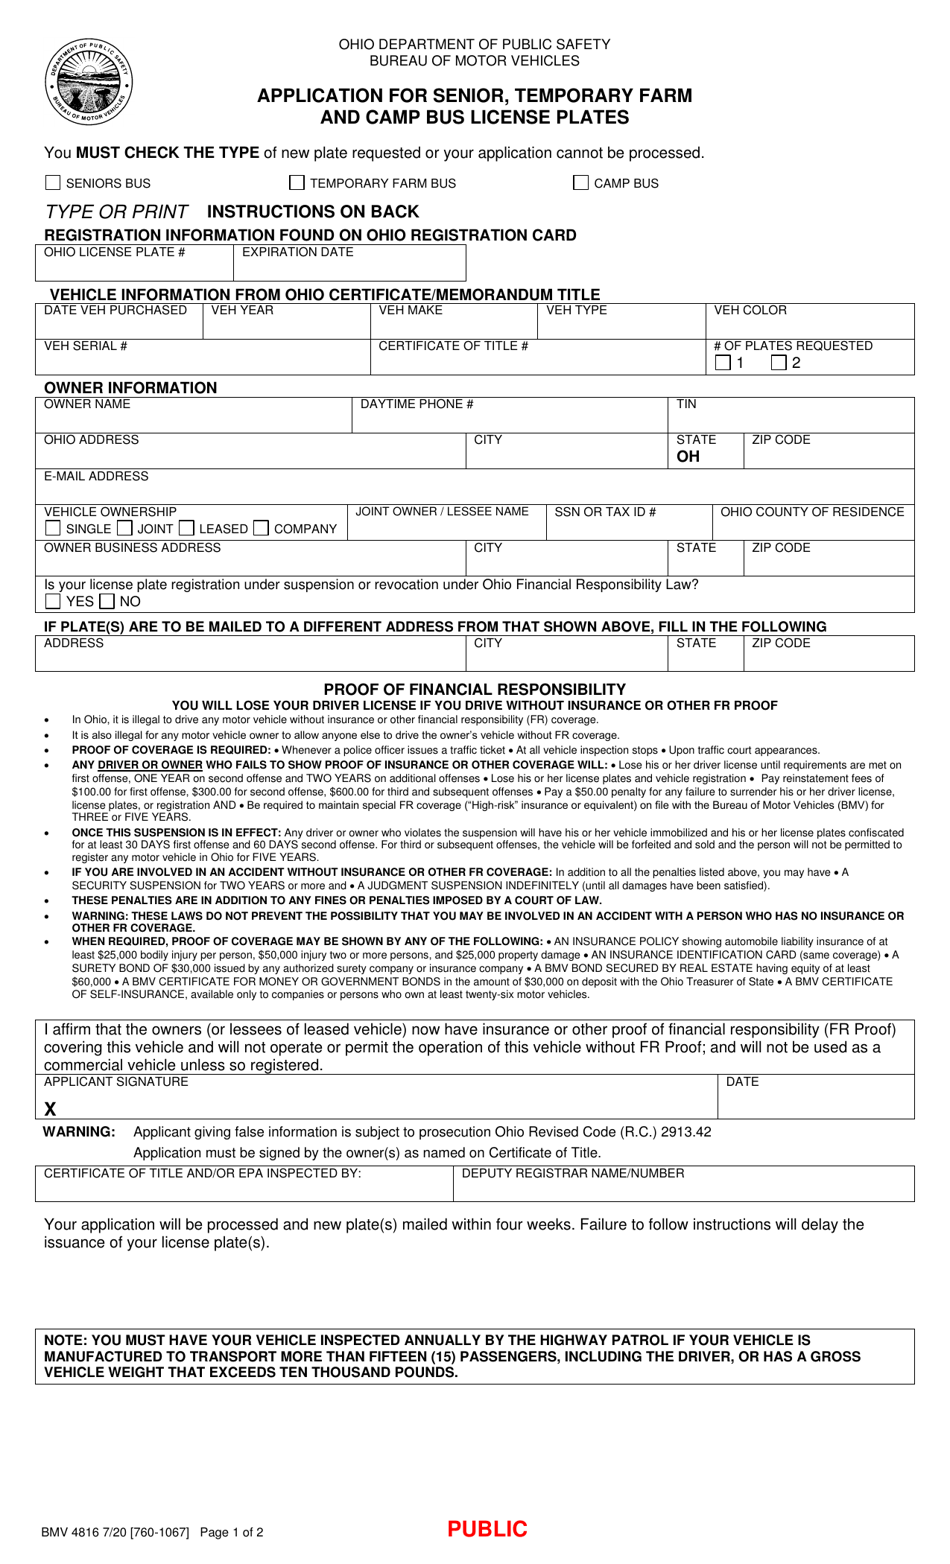 Form BMV4816 Application for Senior, Temporary Farm and Camp Bus License Plates - Ohio, Page 1